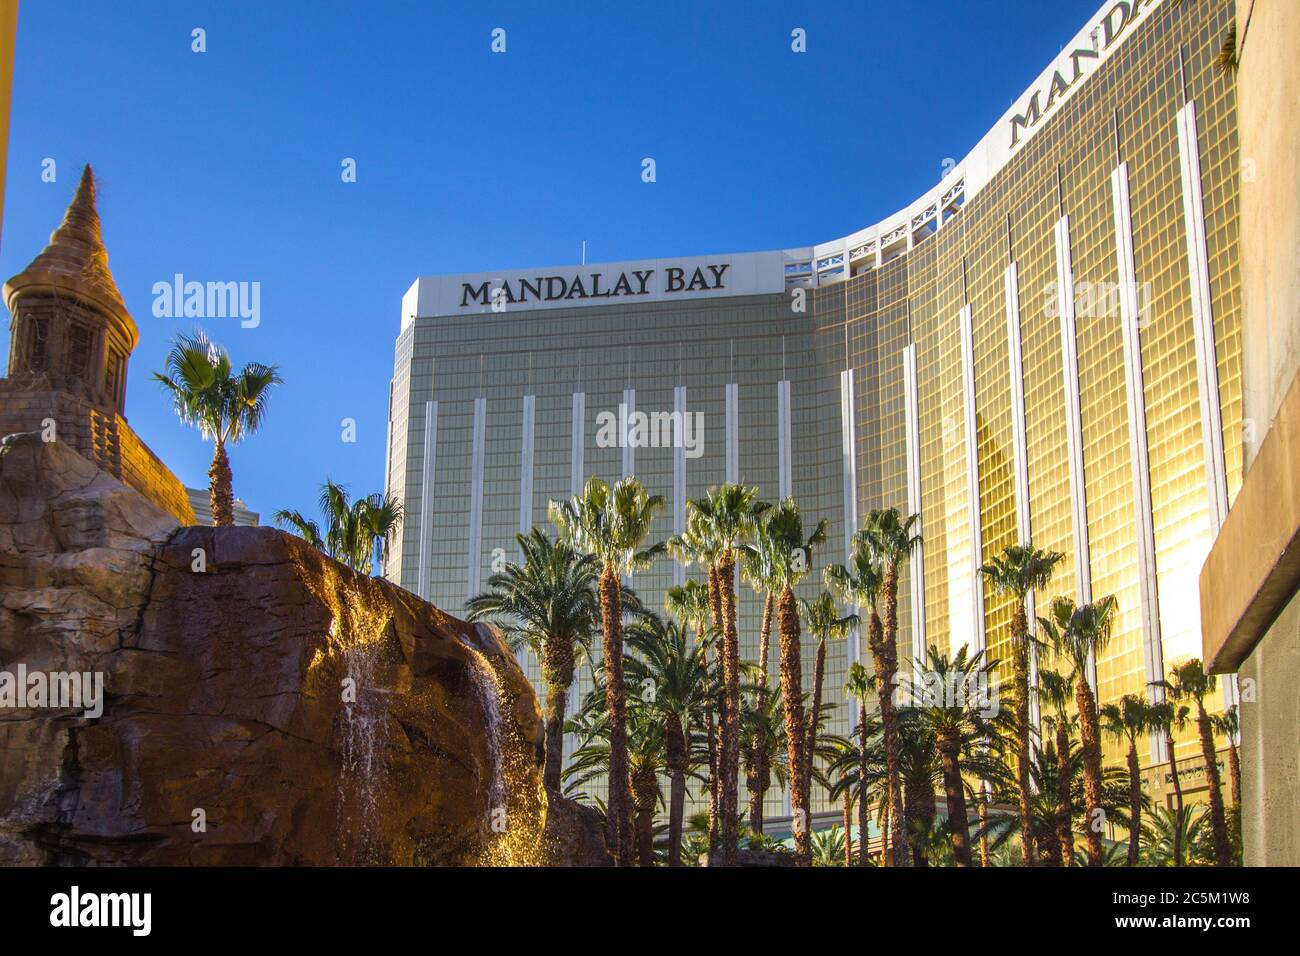 Las Vegas, Nevada, USA - 20. Februar 2020: Palmen und dekorative Brunnen vor dem Mandalay Bay Casino und Resort am Las Vegas Strip. Stockfoto